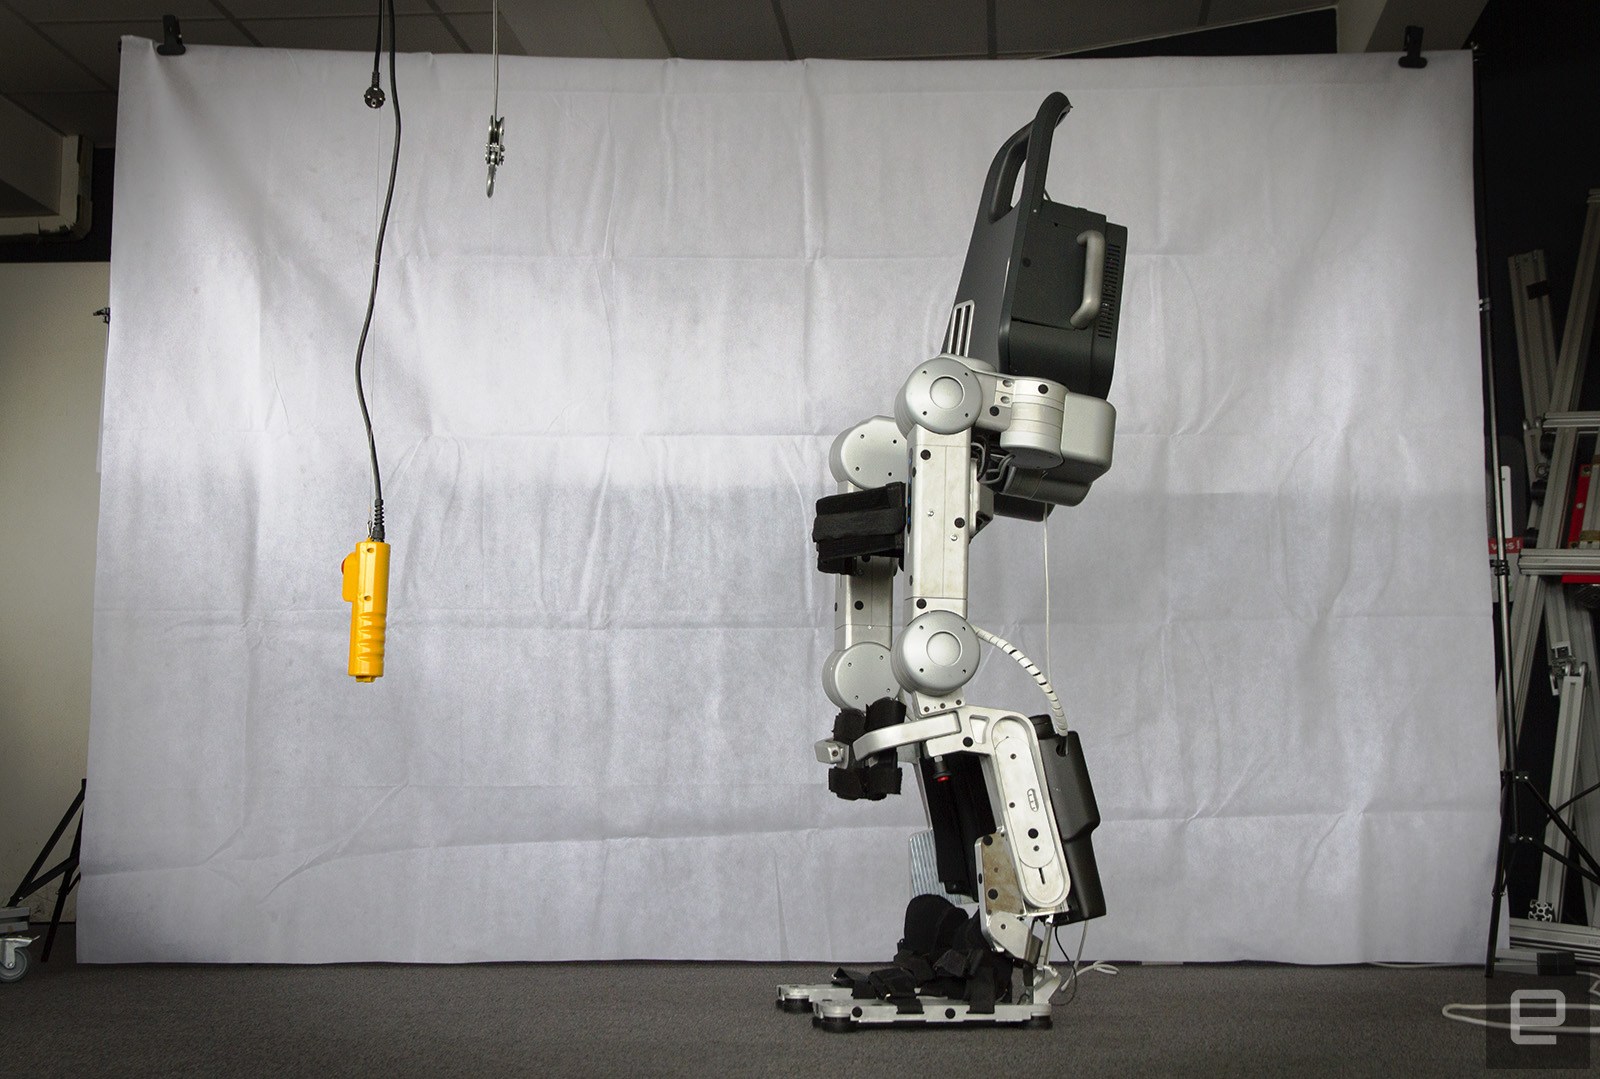 Wandercraft s exoskeleton  was made to help paraplegics walk